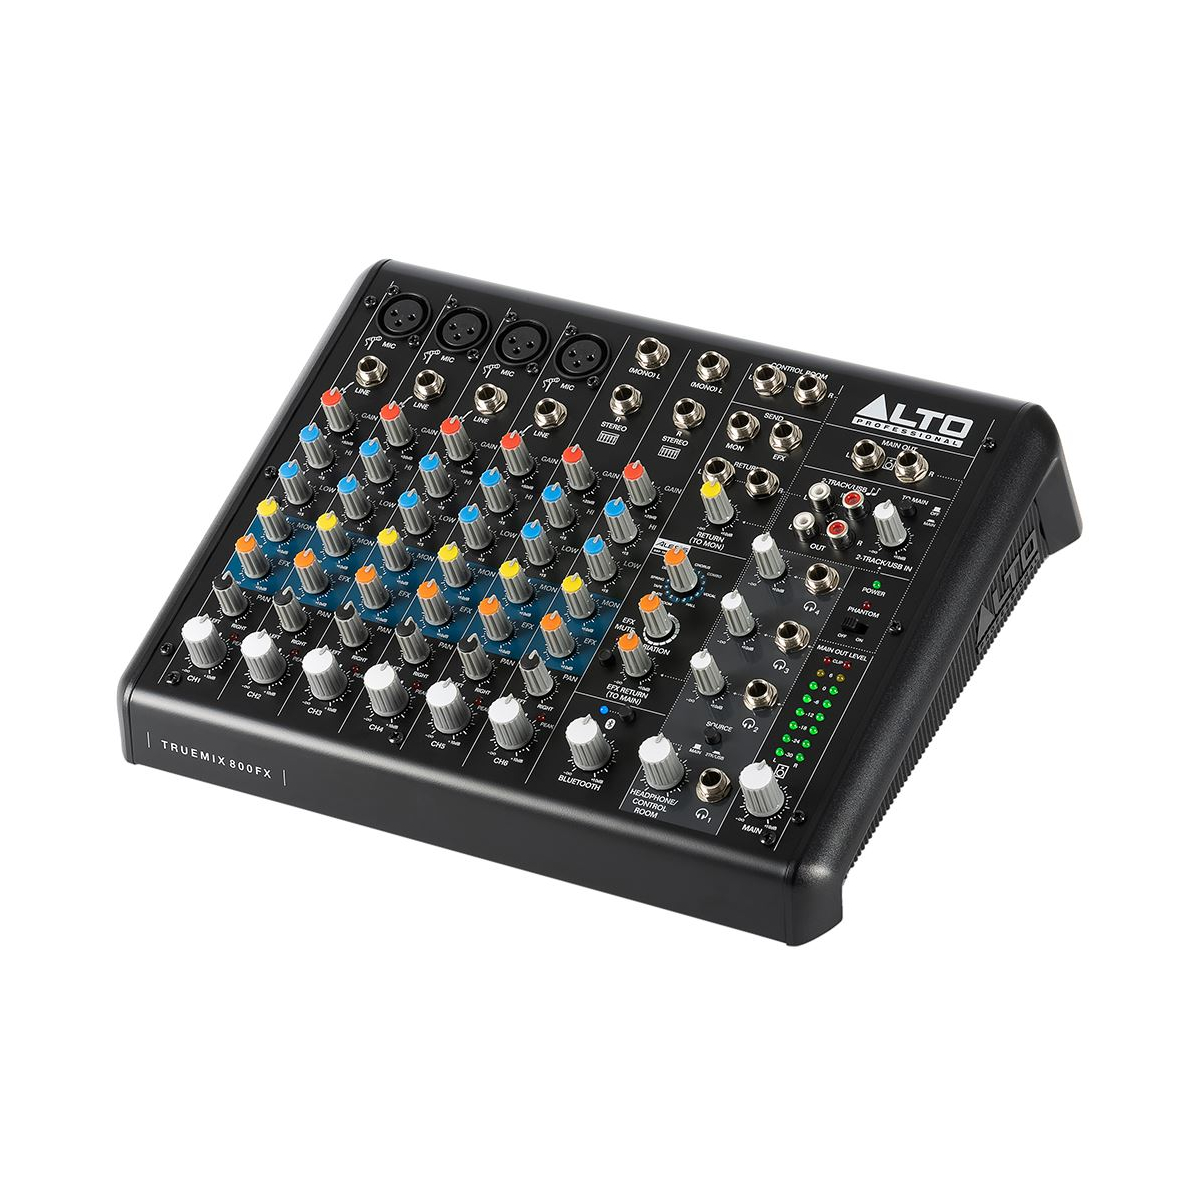 Consoles analogiques - Alto - TrueMix 800 FX